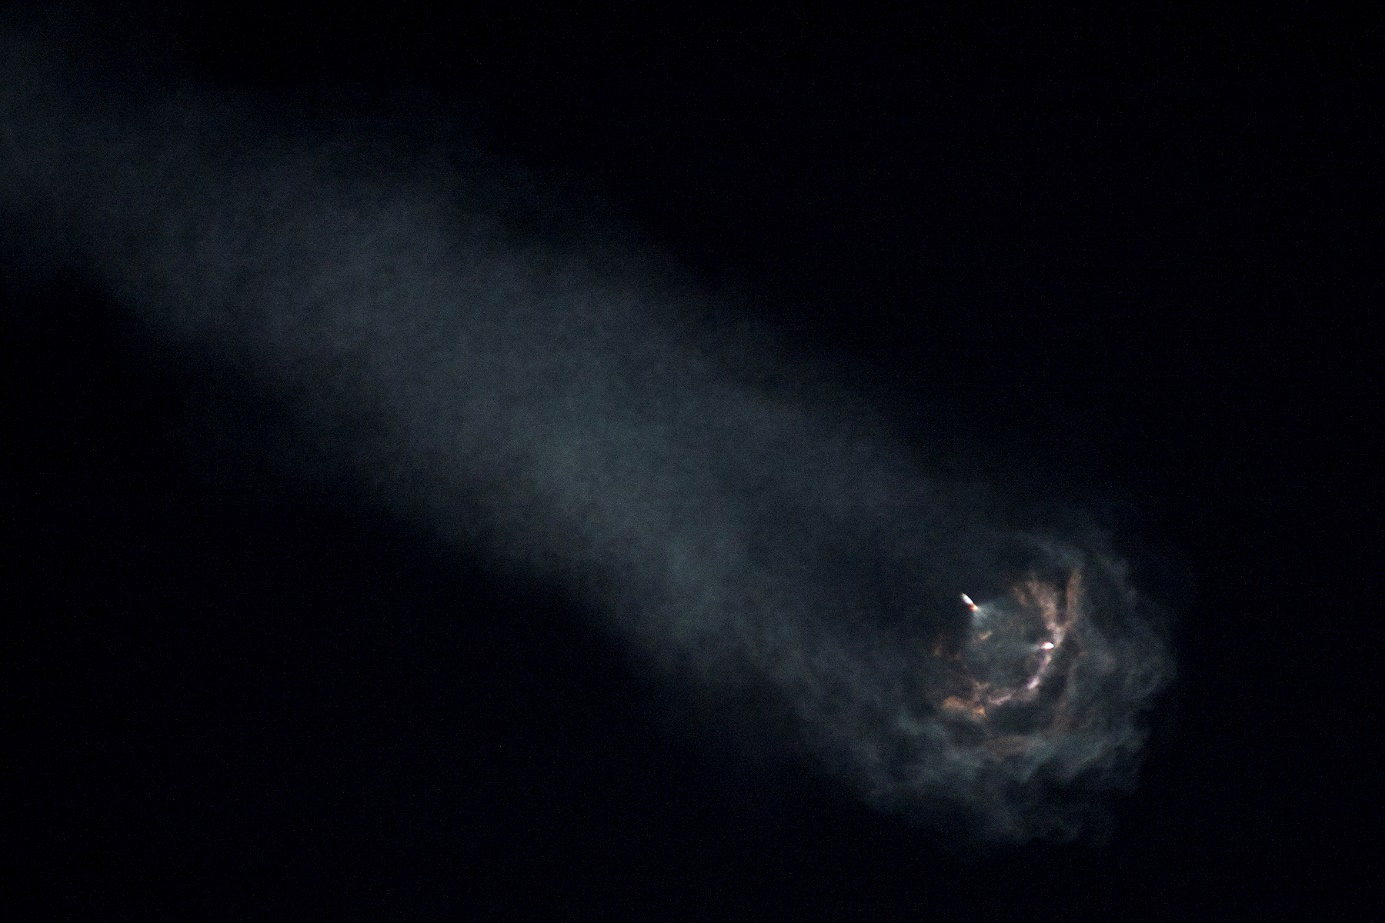 Falcon 9 CSG-2 Stage Separation, Photo Courtesy Carleton Bailie-Spaceline